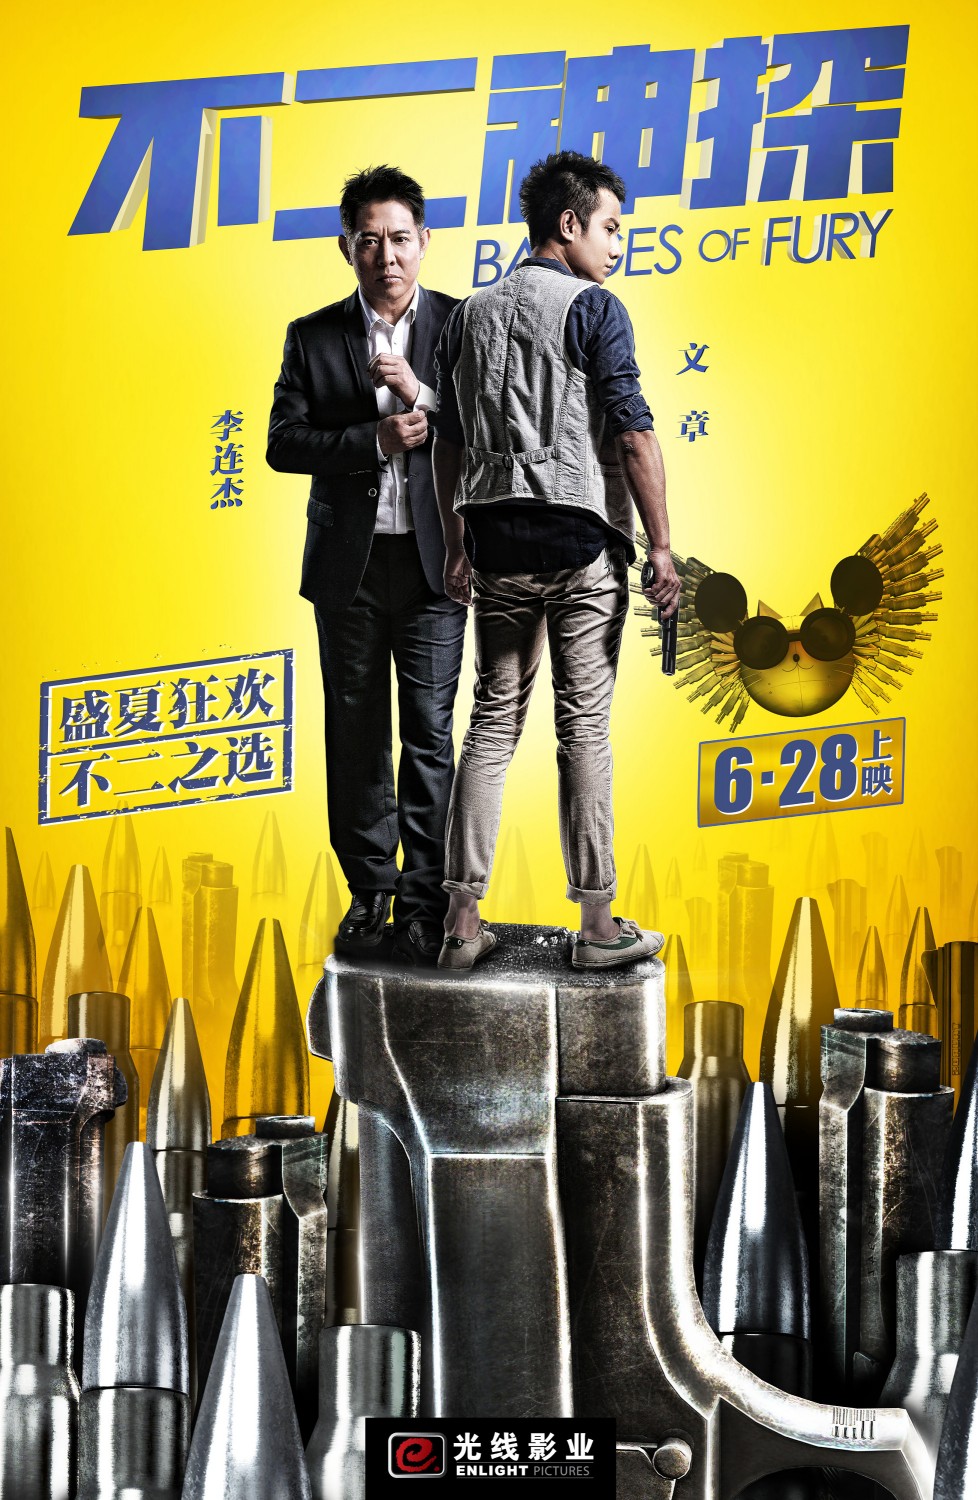 Extra Large Movie Poster Image for Bu er shen tan (#5 of 5)